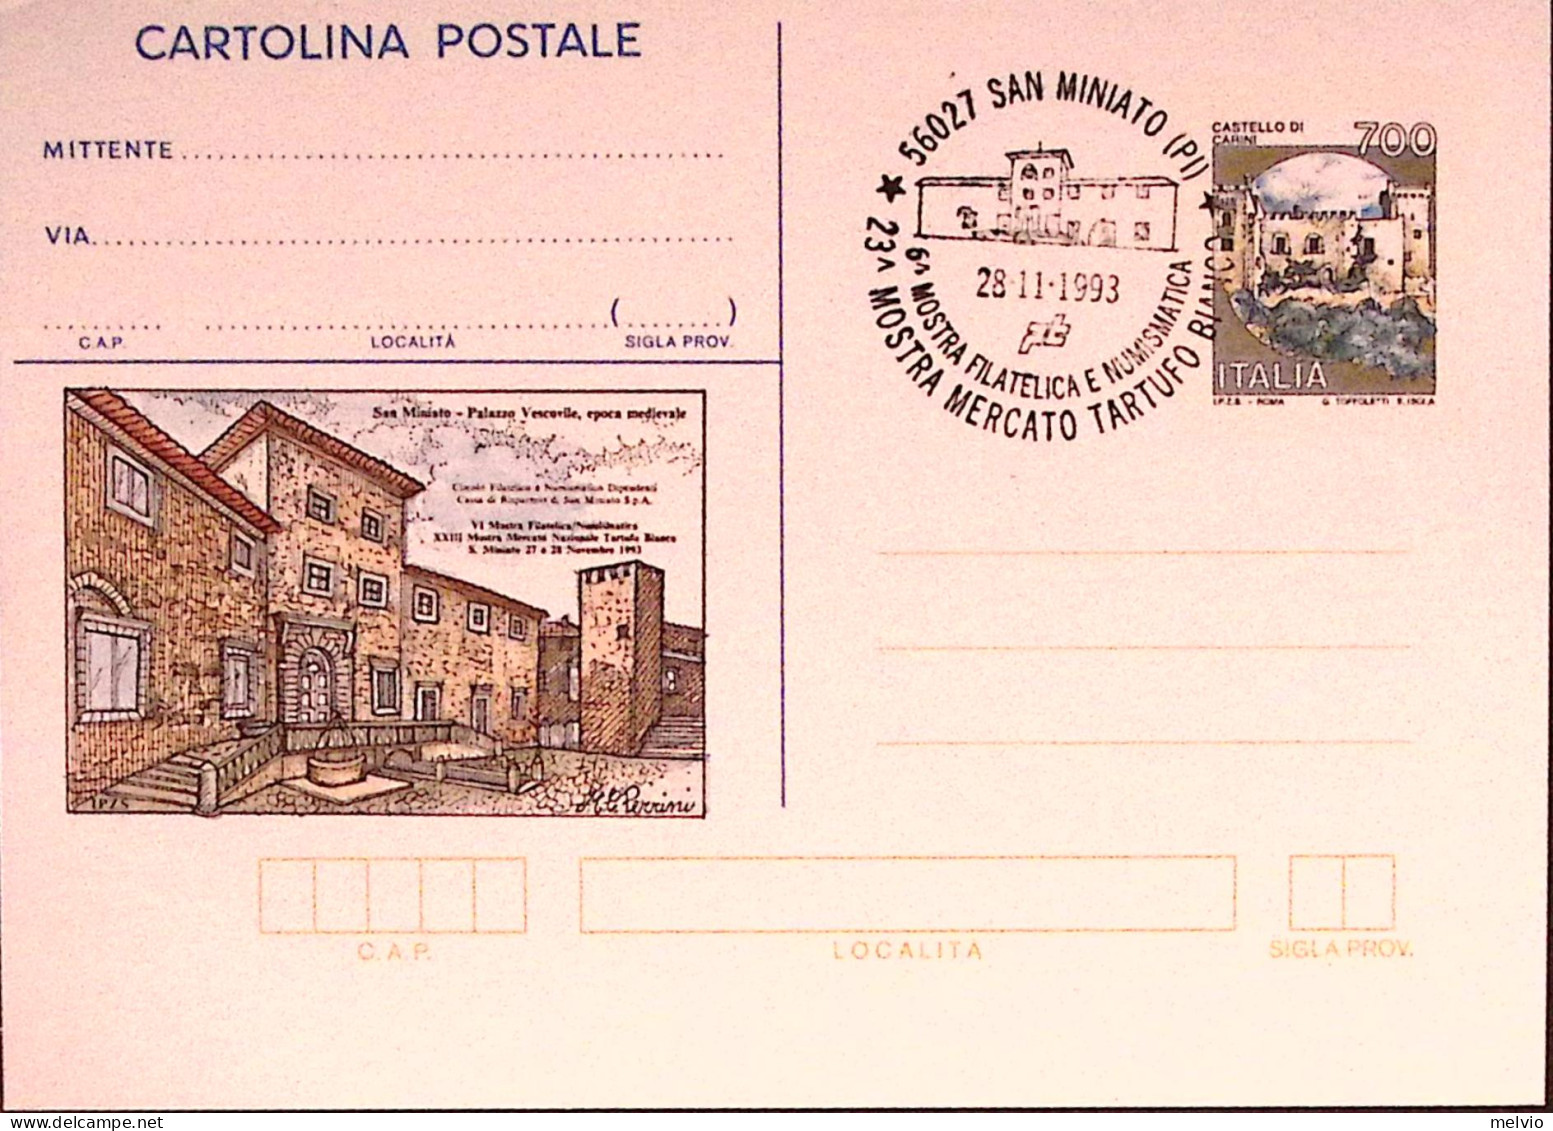 1993-SAN MINIATO Cartolina Postale IPZS Lire 700 Con Ann Spec - Interi Postali